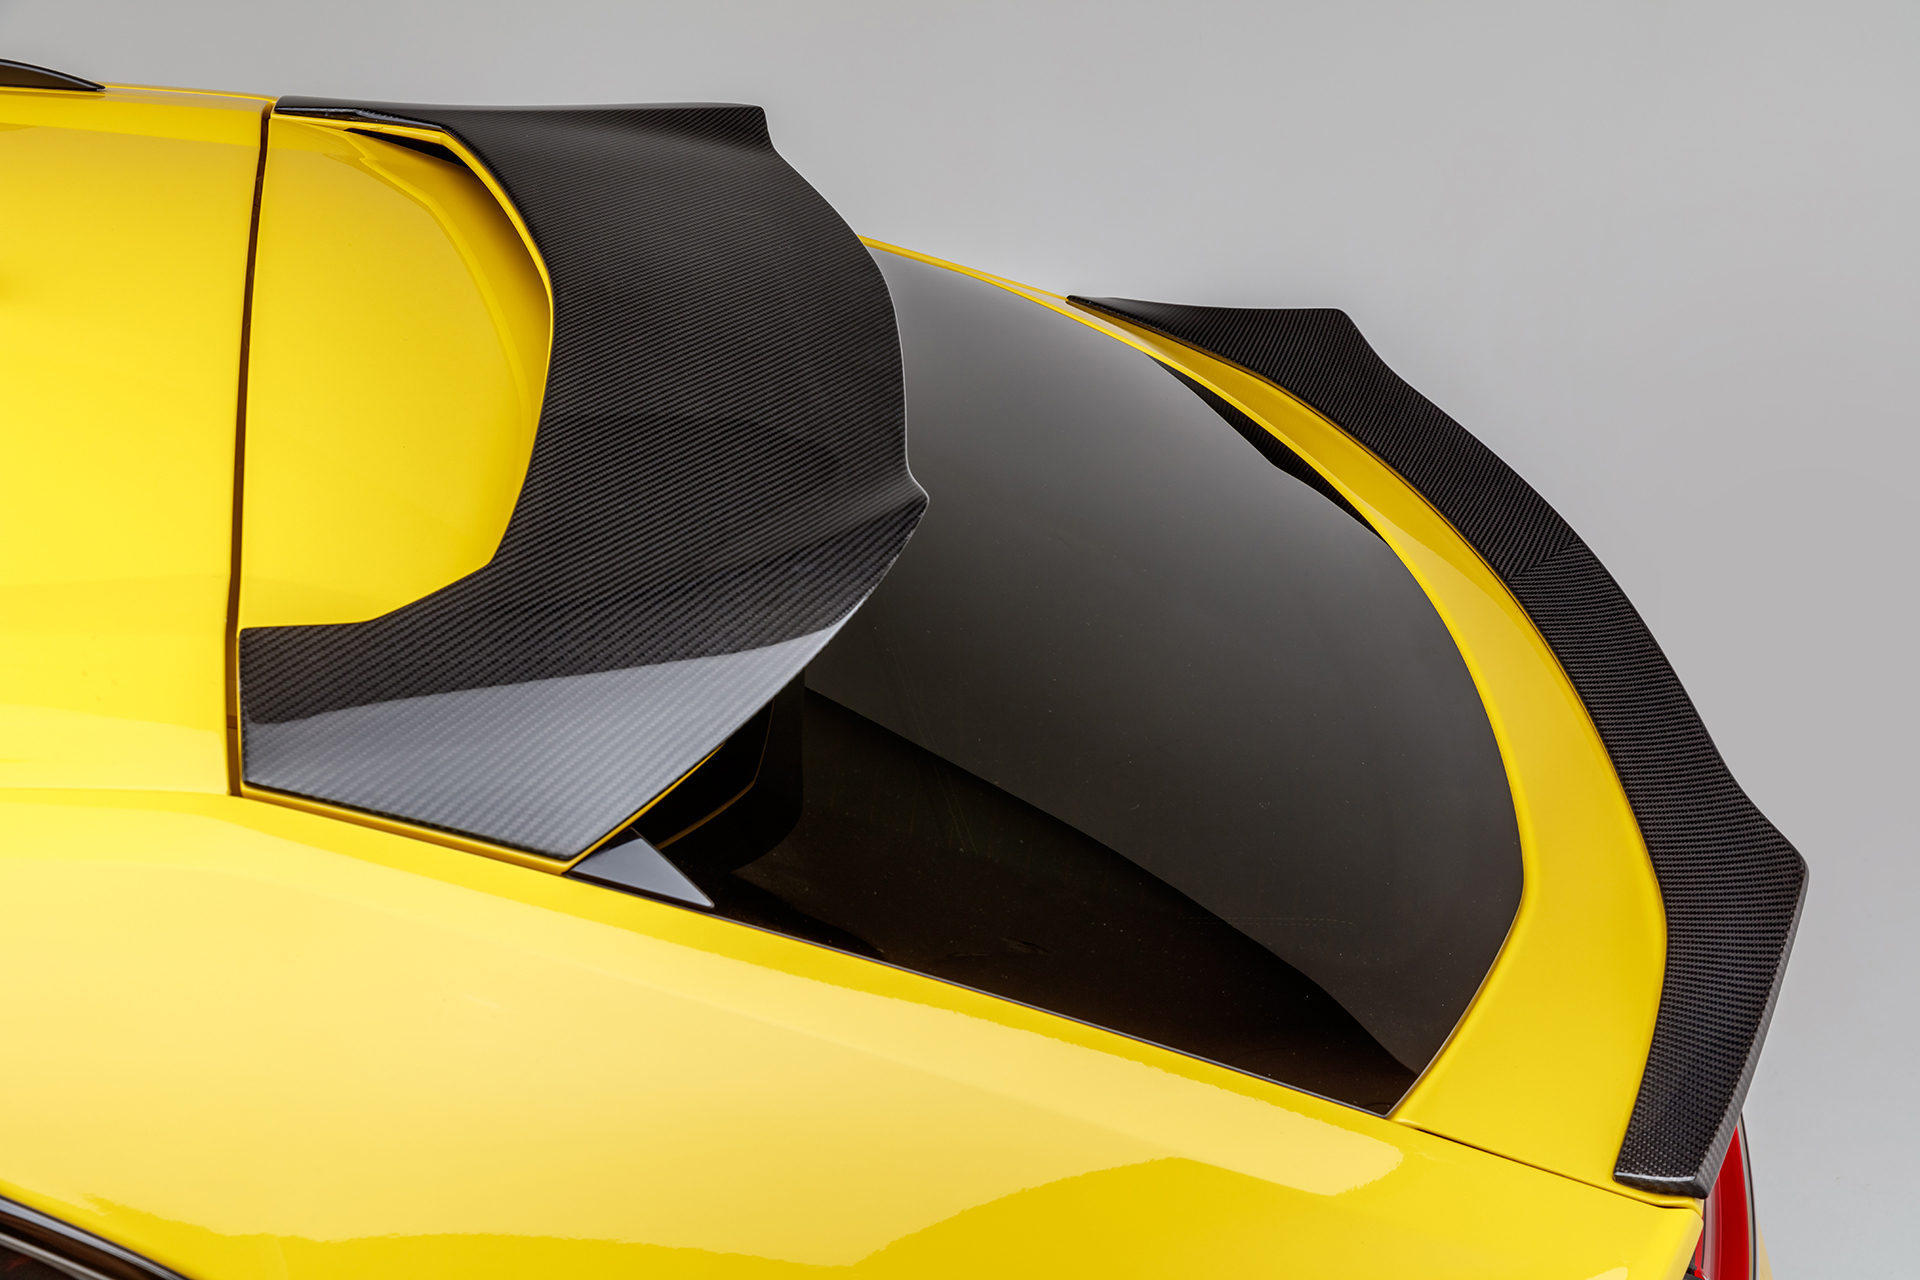 Vorsteiner Nero body kit for Lamborghini Urus new style